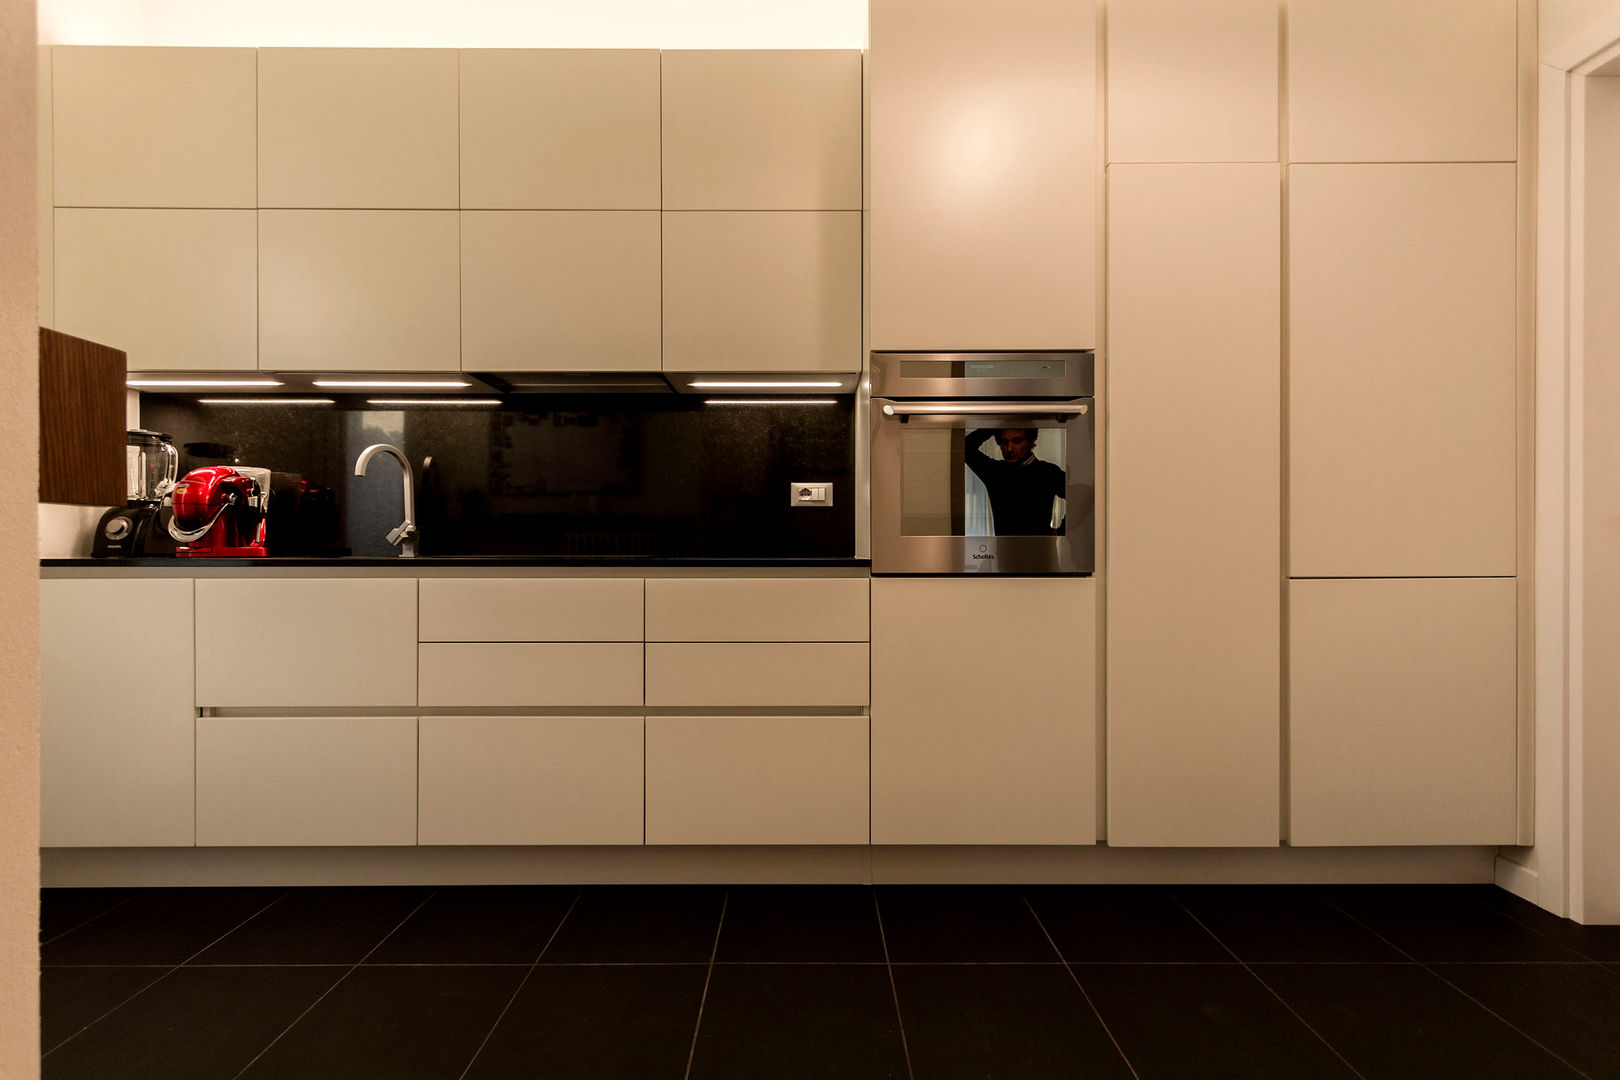 Appartamento Residenziale - Cernobbio 2015, Galleria del Vento Galleria del Vento Cozinhas modernas